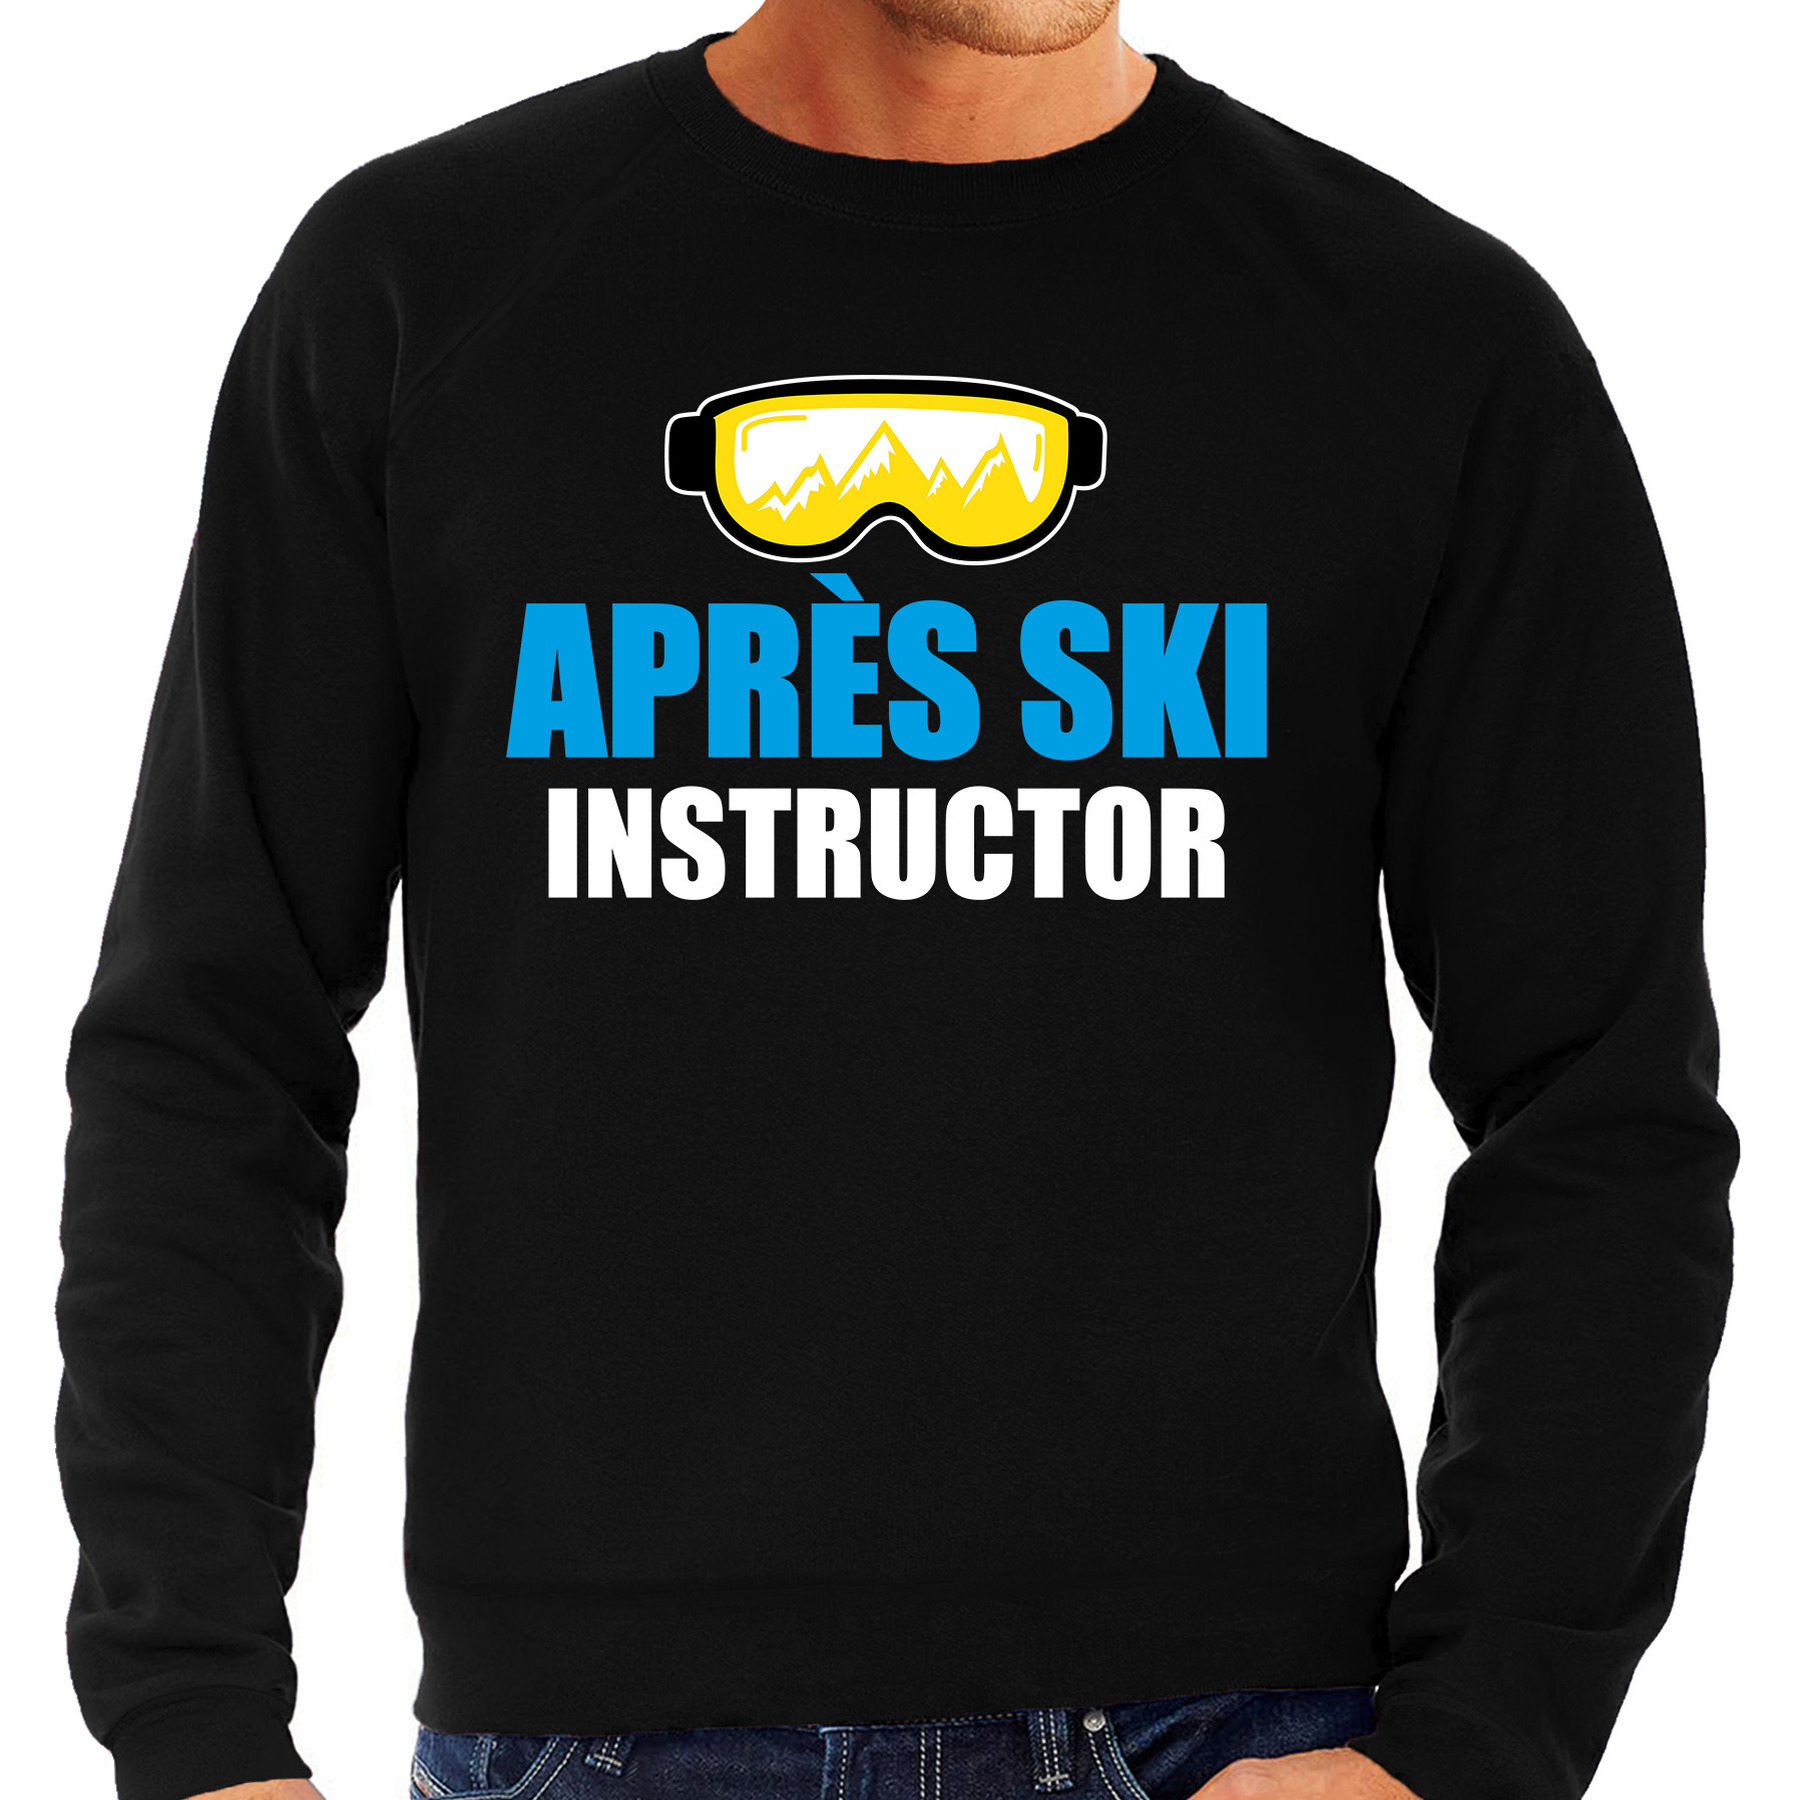 Apres ski trui Apres ski instructor zwart heren Wintersport sweater Foute apres ski outfit